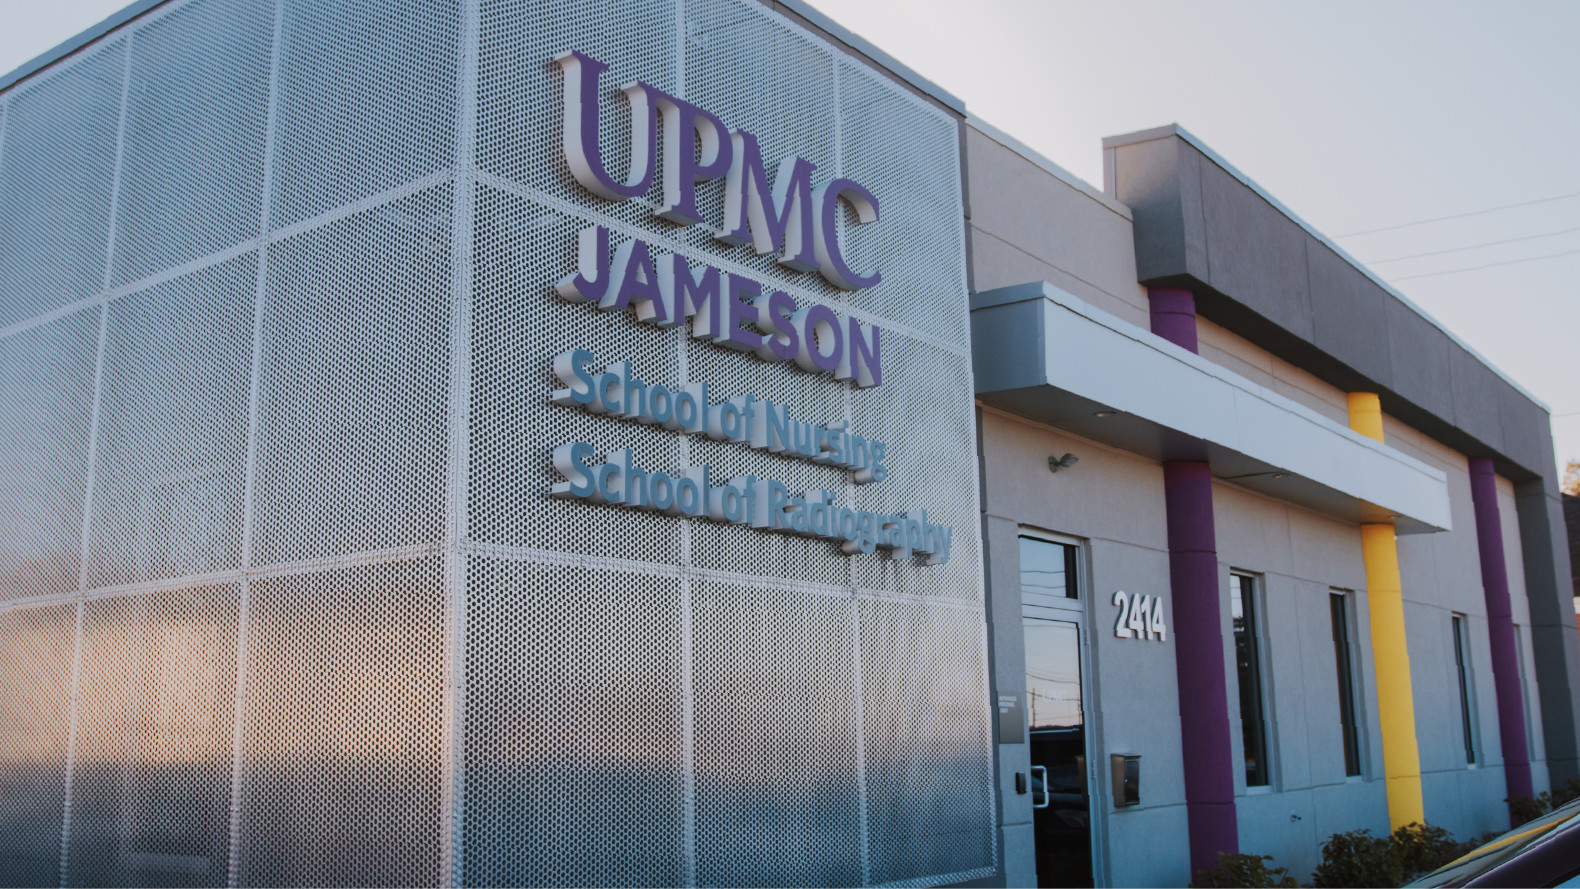 UPMC Jameson School of Nursing